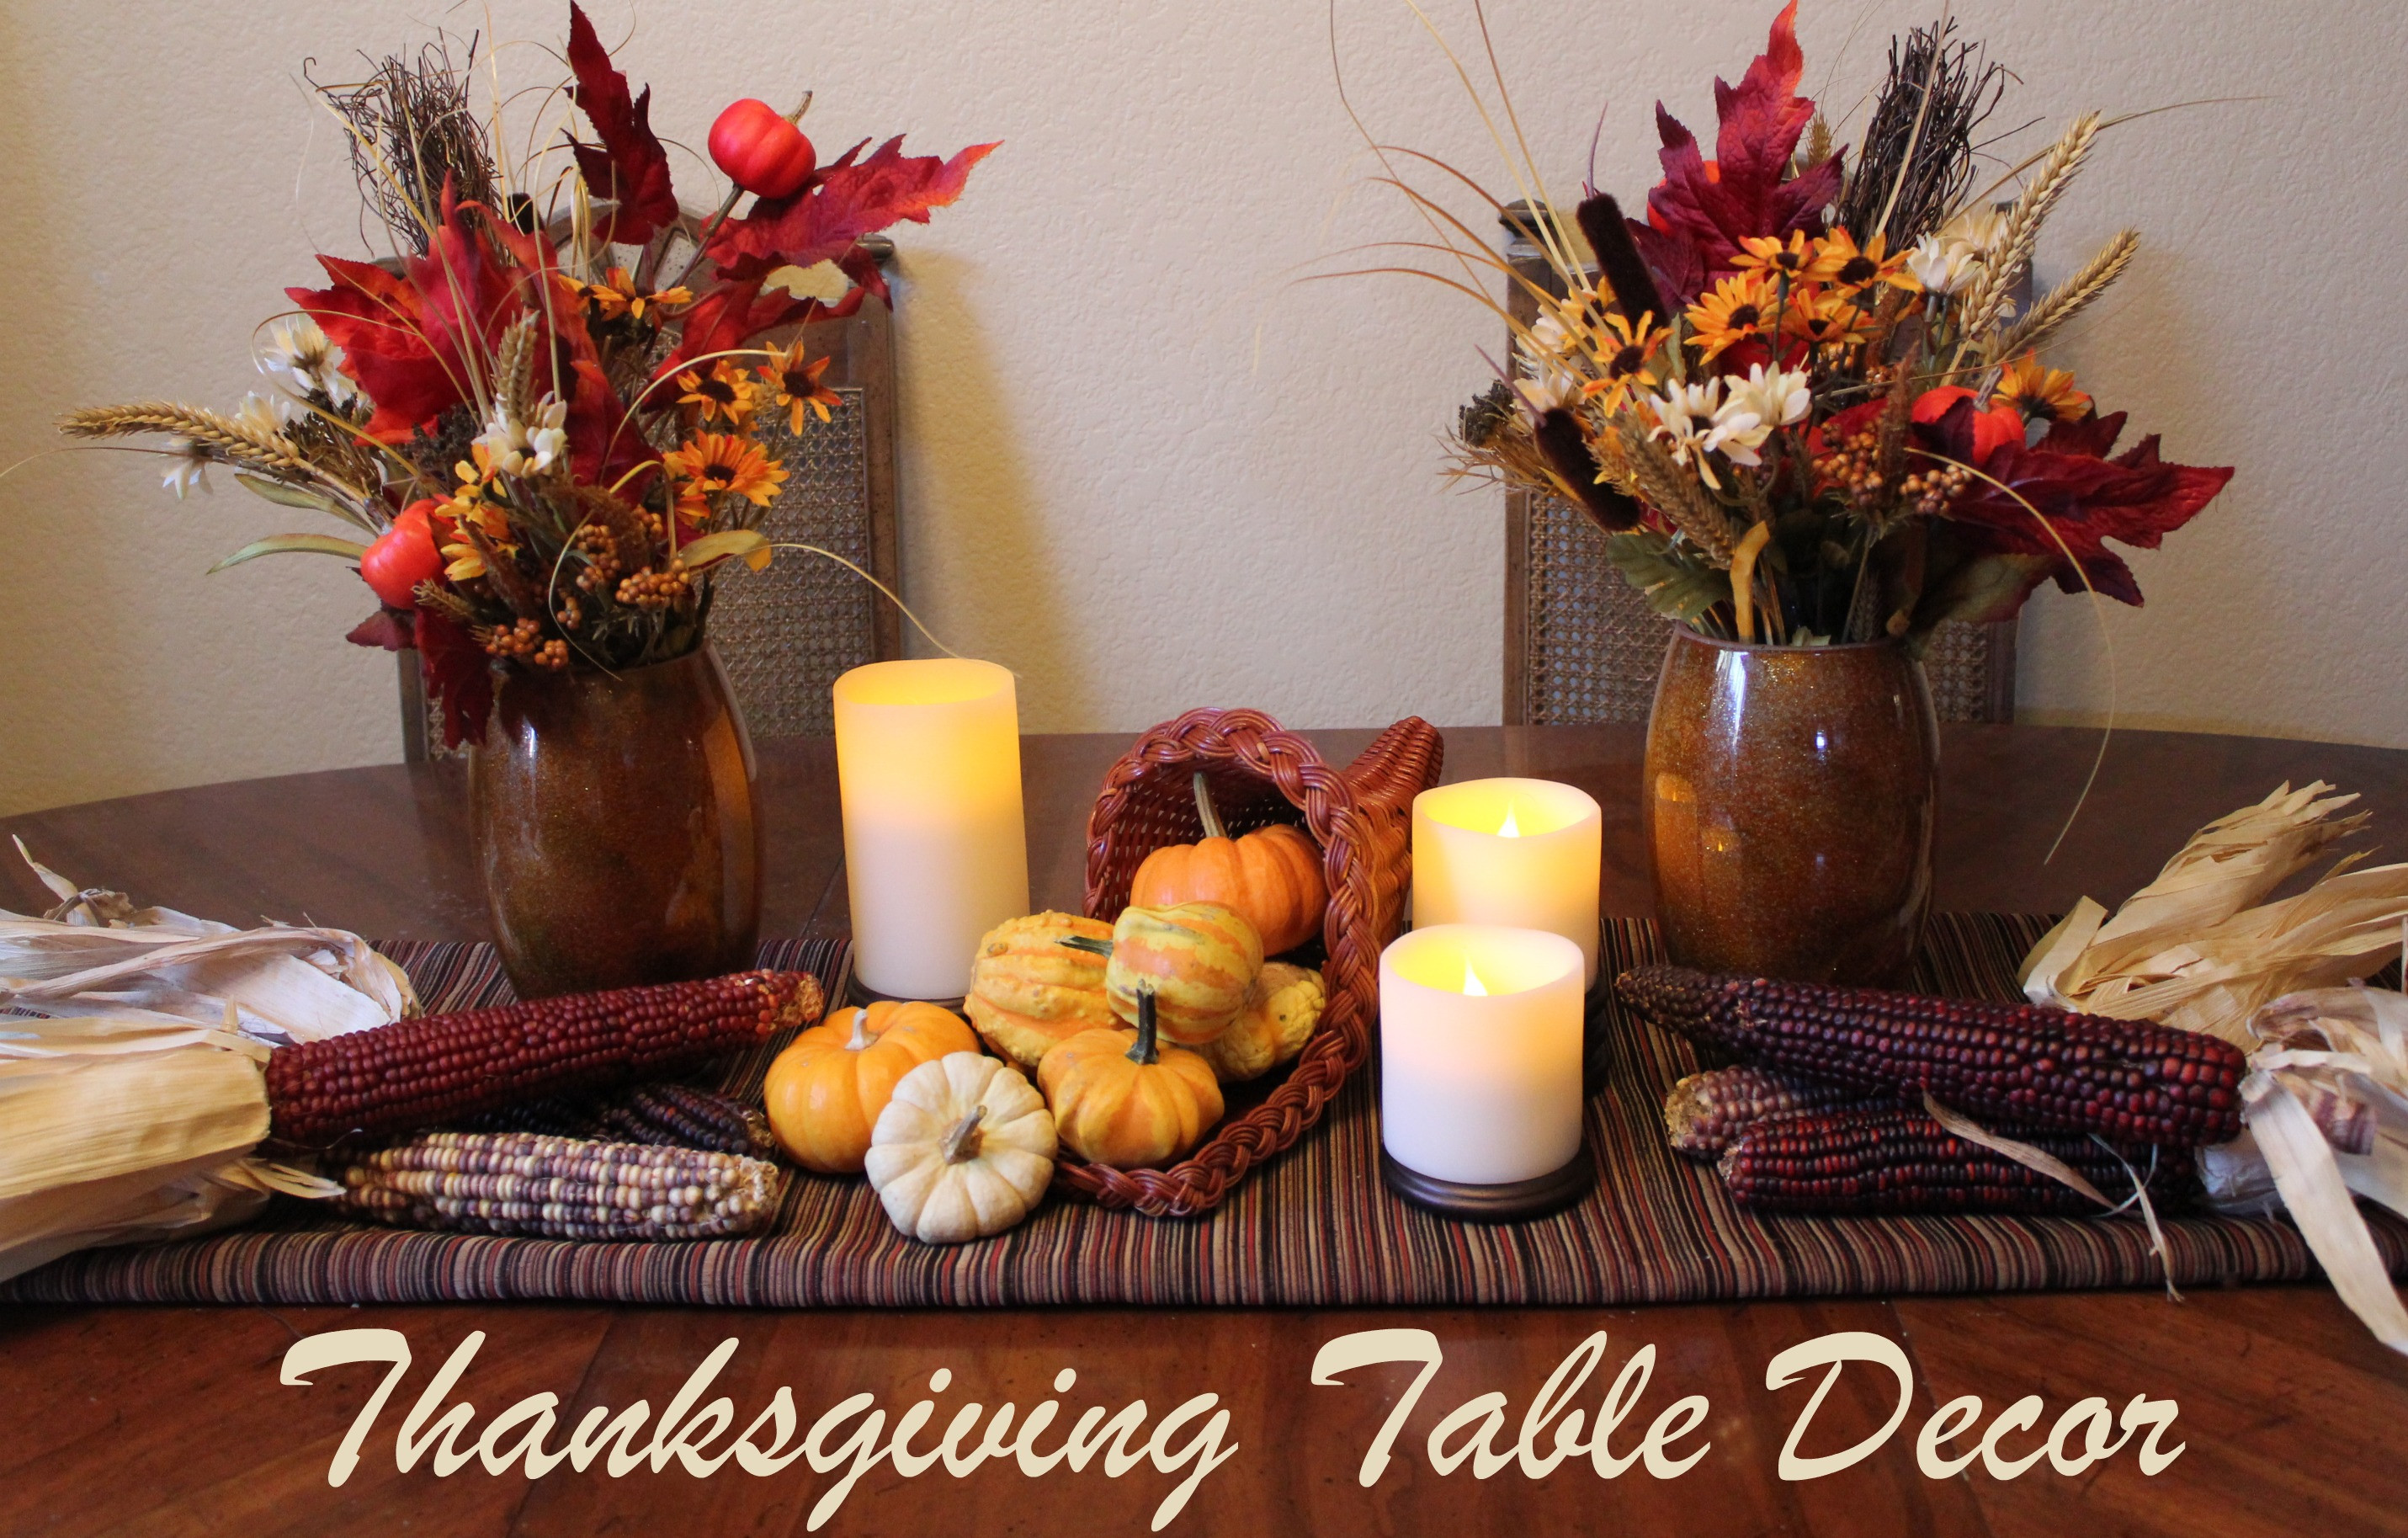 Diy Thanksgiving Table Decorations
 Cornucopia of Creativity DIY Thanksgiving Table Decor